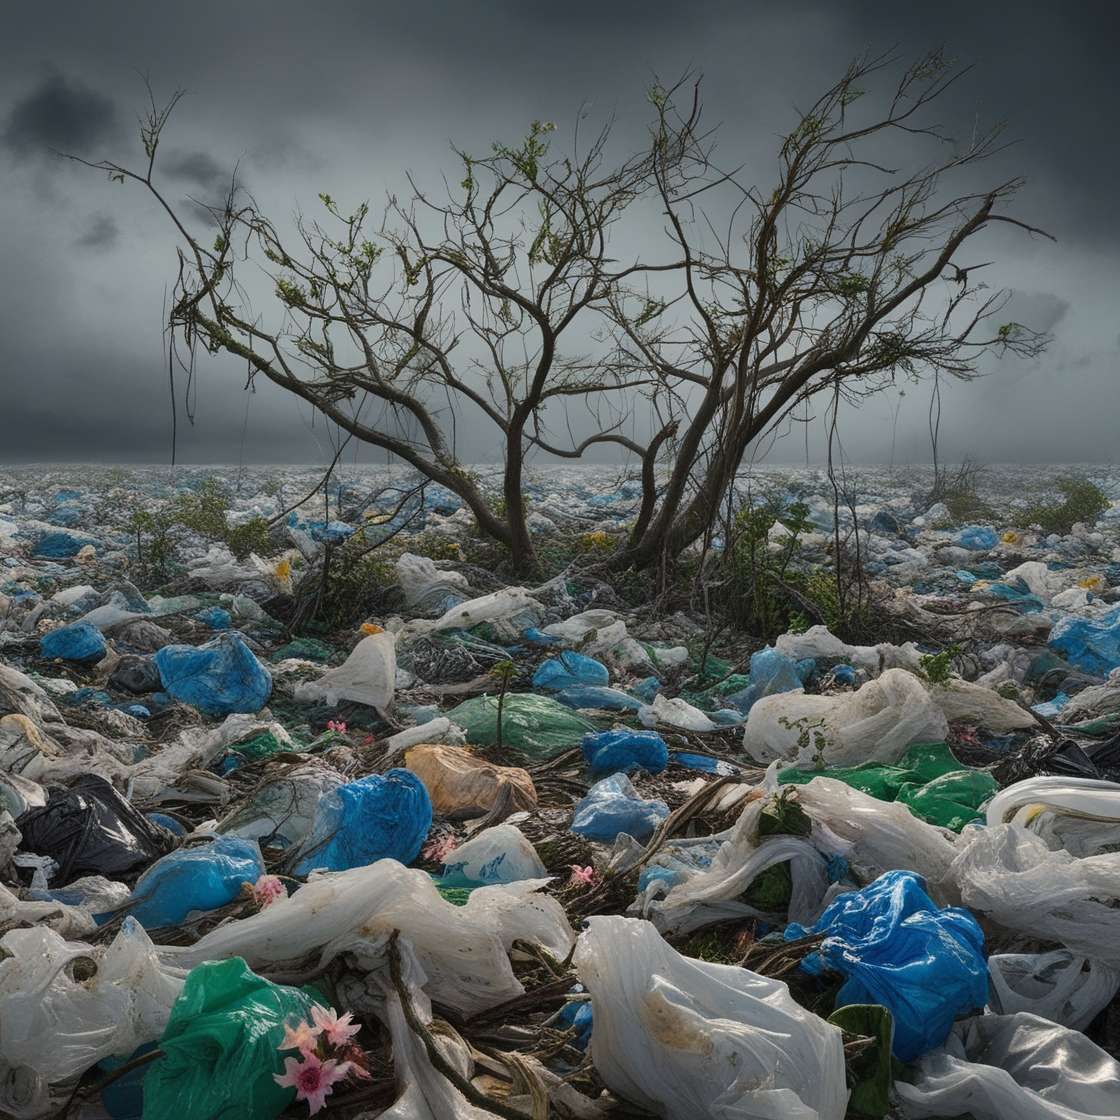 Oppose Reusable Plastic Bag Ban in California